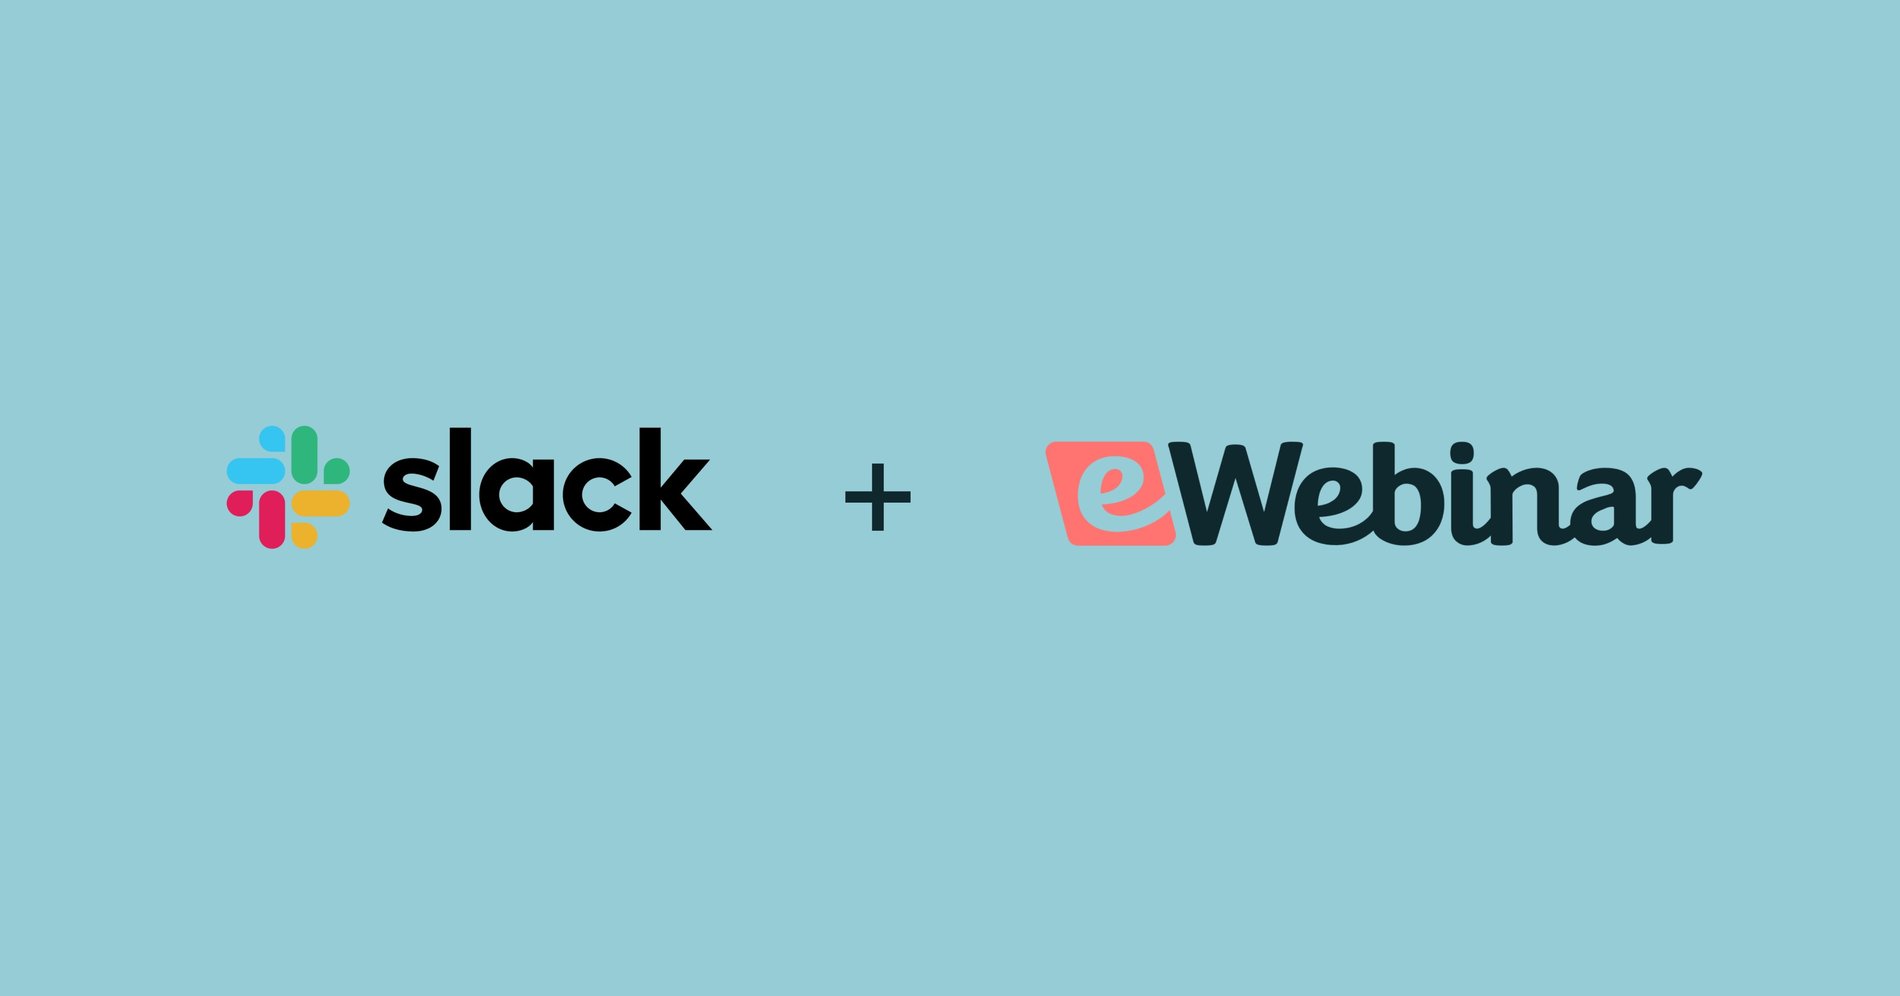 eWebinar s'intègre à Slack